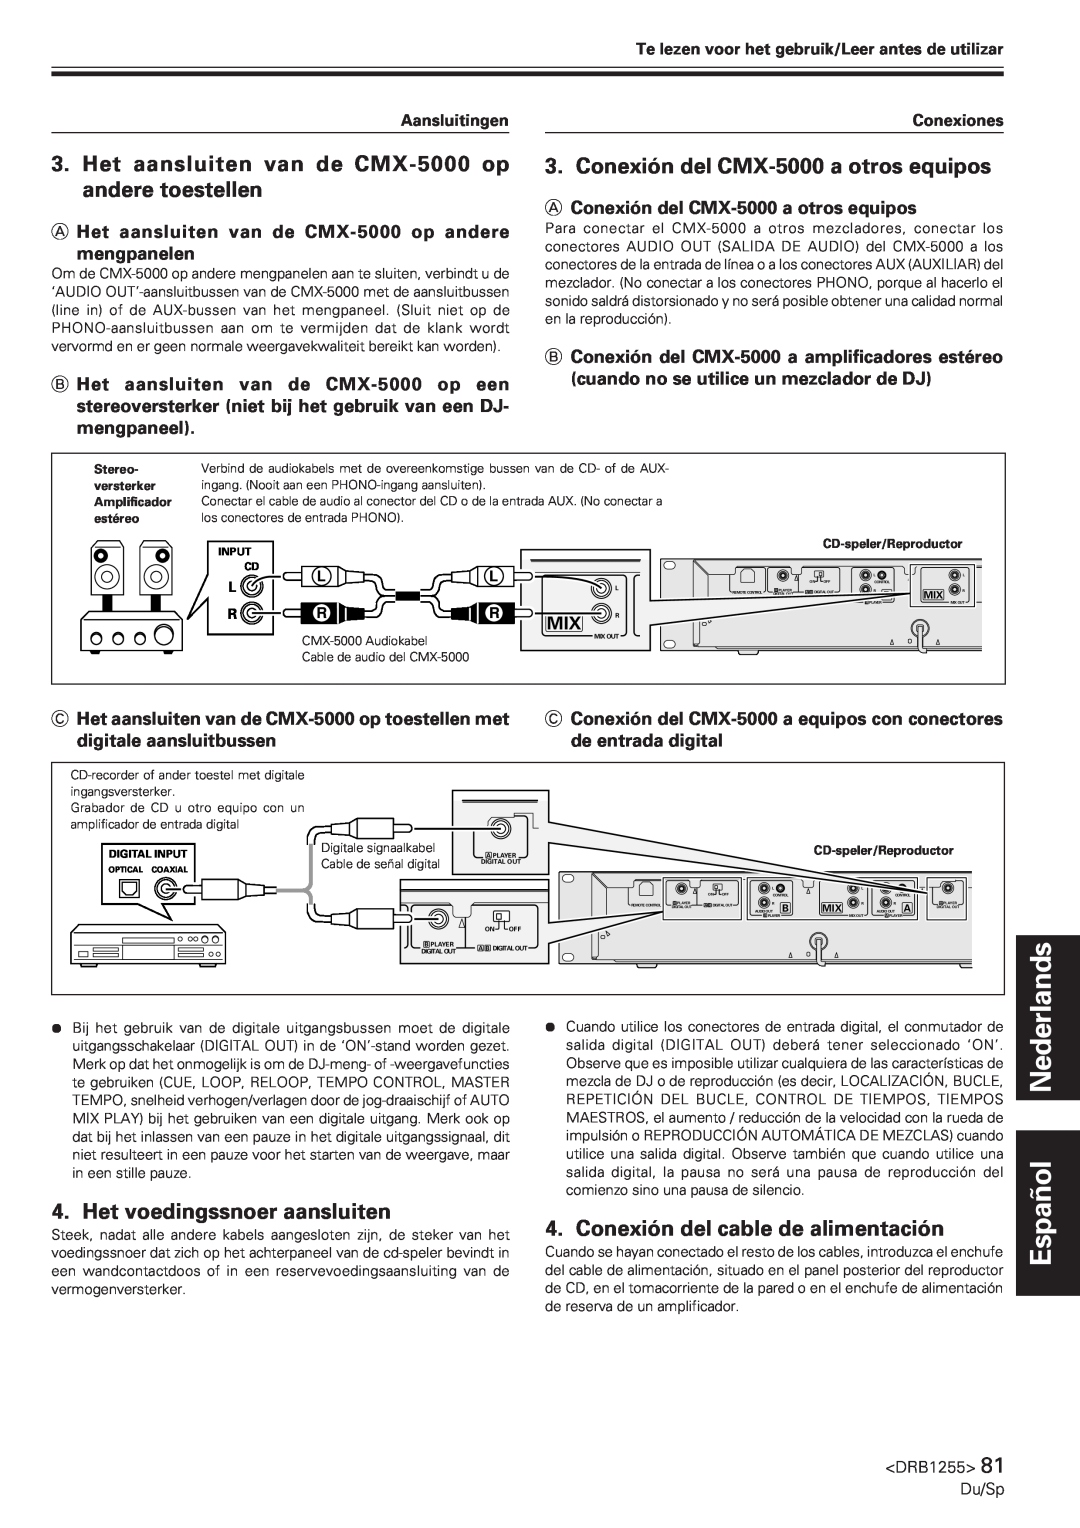 Pioneer manual Nederlands, Español, Conexión del CMX-5000a otros equipos, Het voedingssnoer aansluiten 